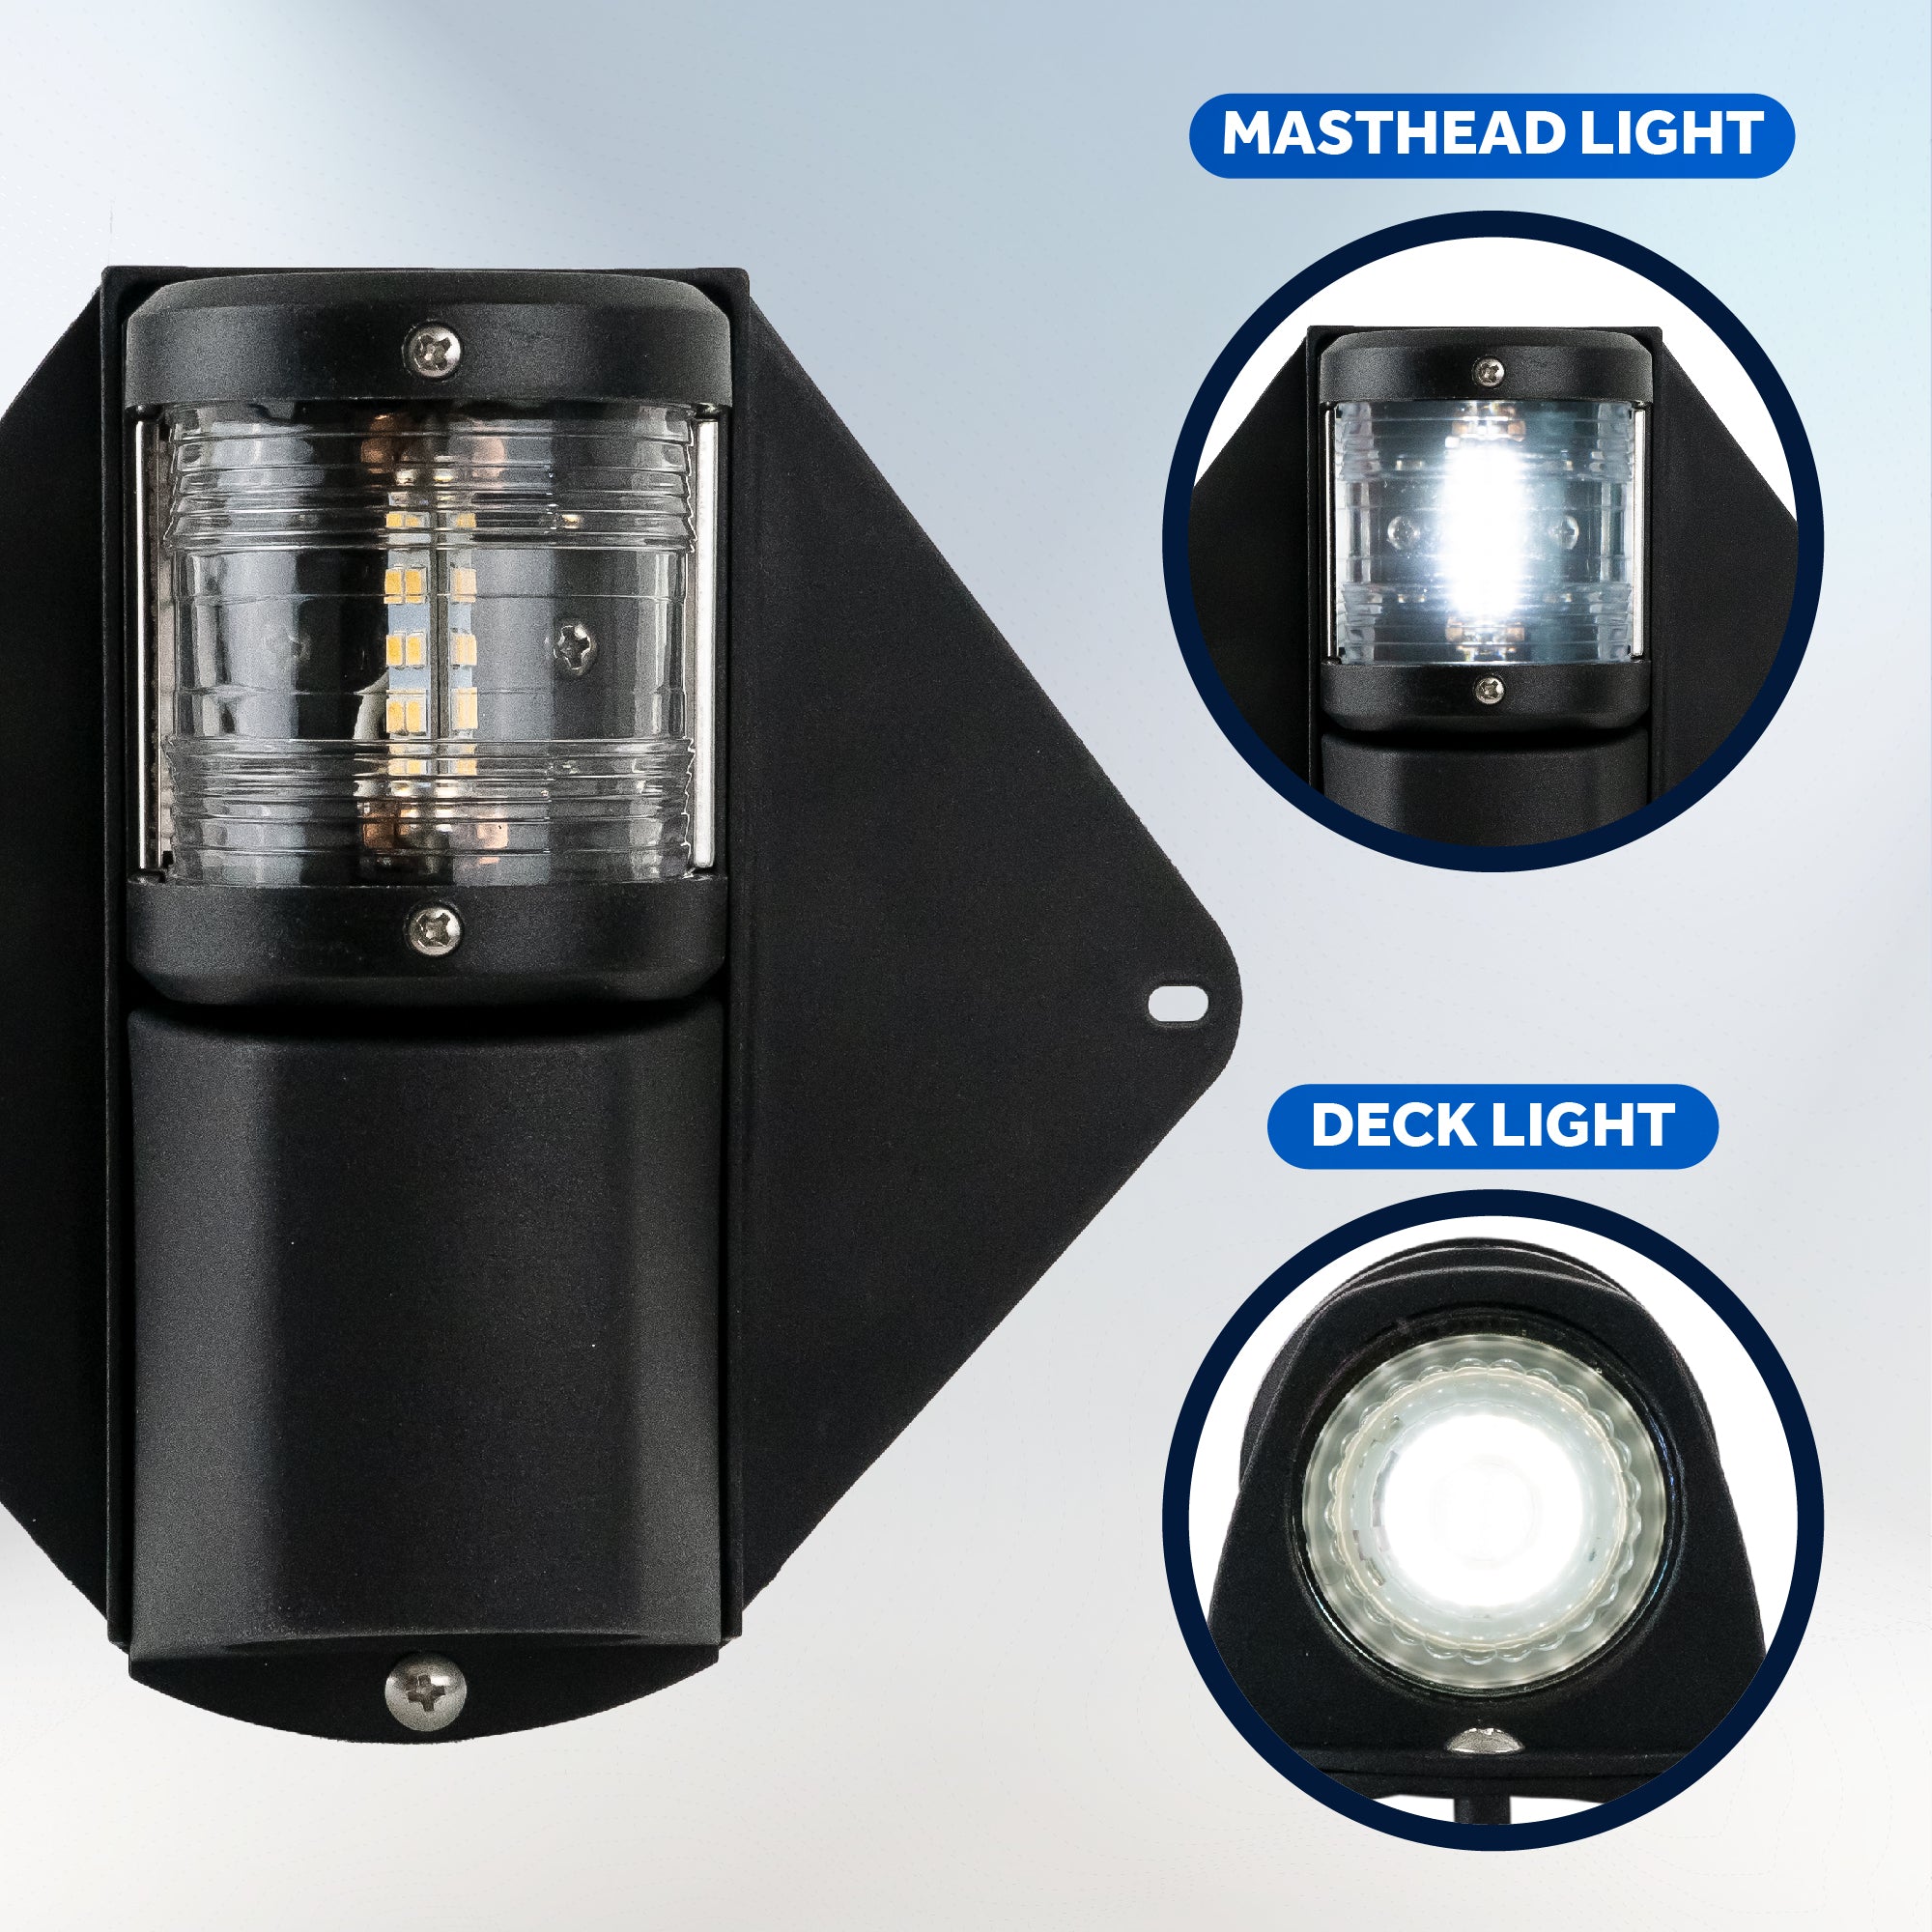 LED Combination Masthead Deck Light, 12V, Vertical Mount - FO3837